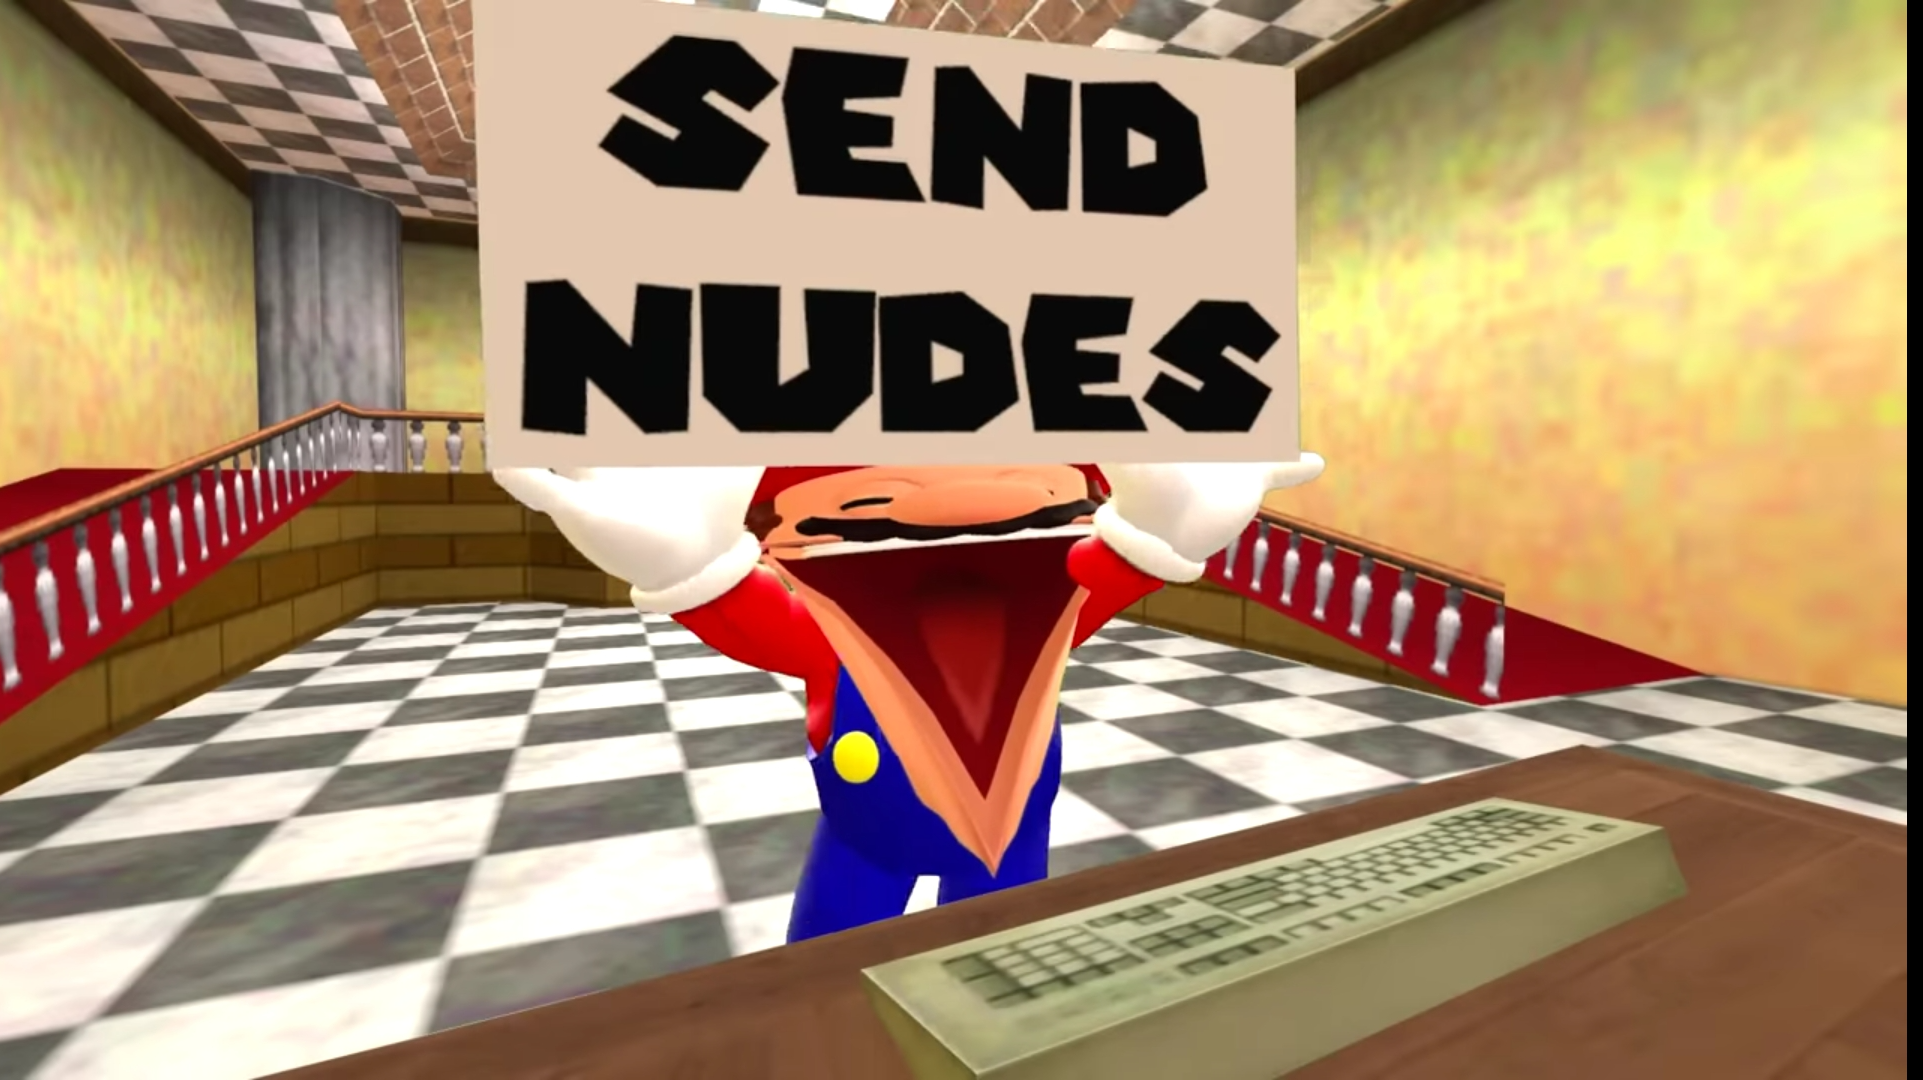 High Quality Mario send nudes Blank Meme Template